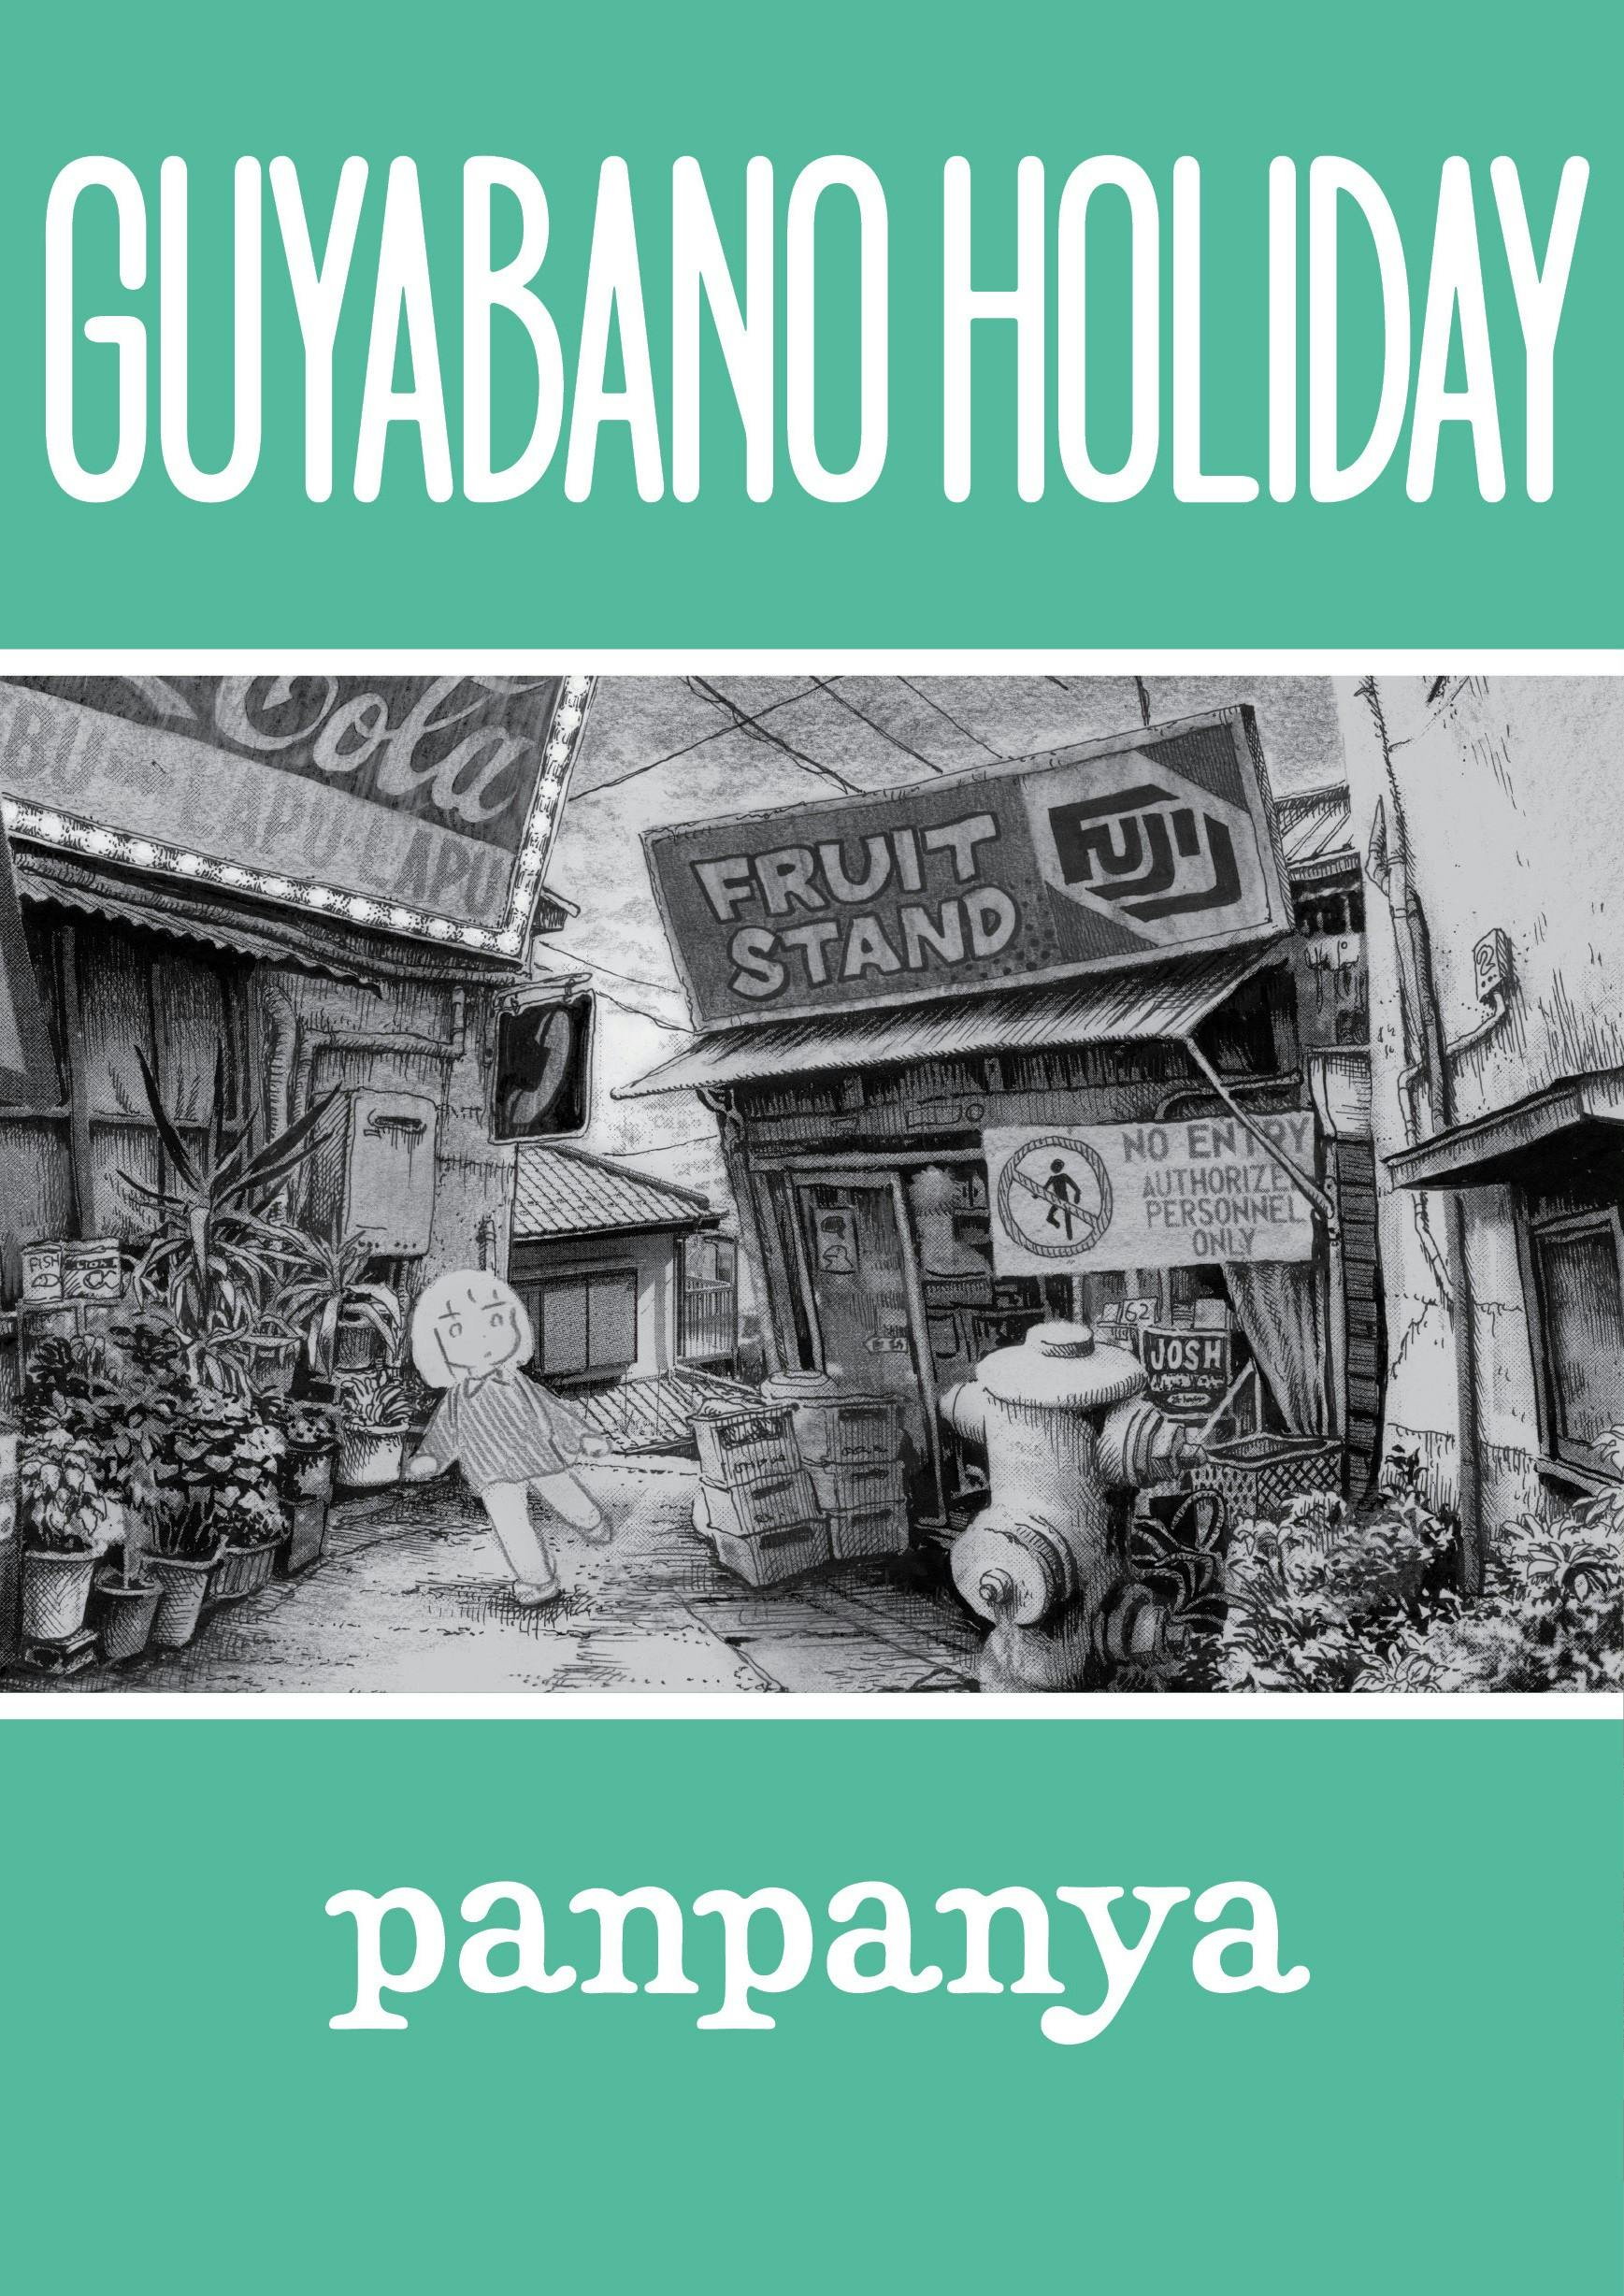 Guyabano Holiday Cover Image